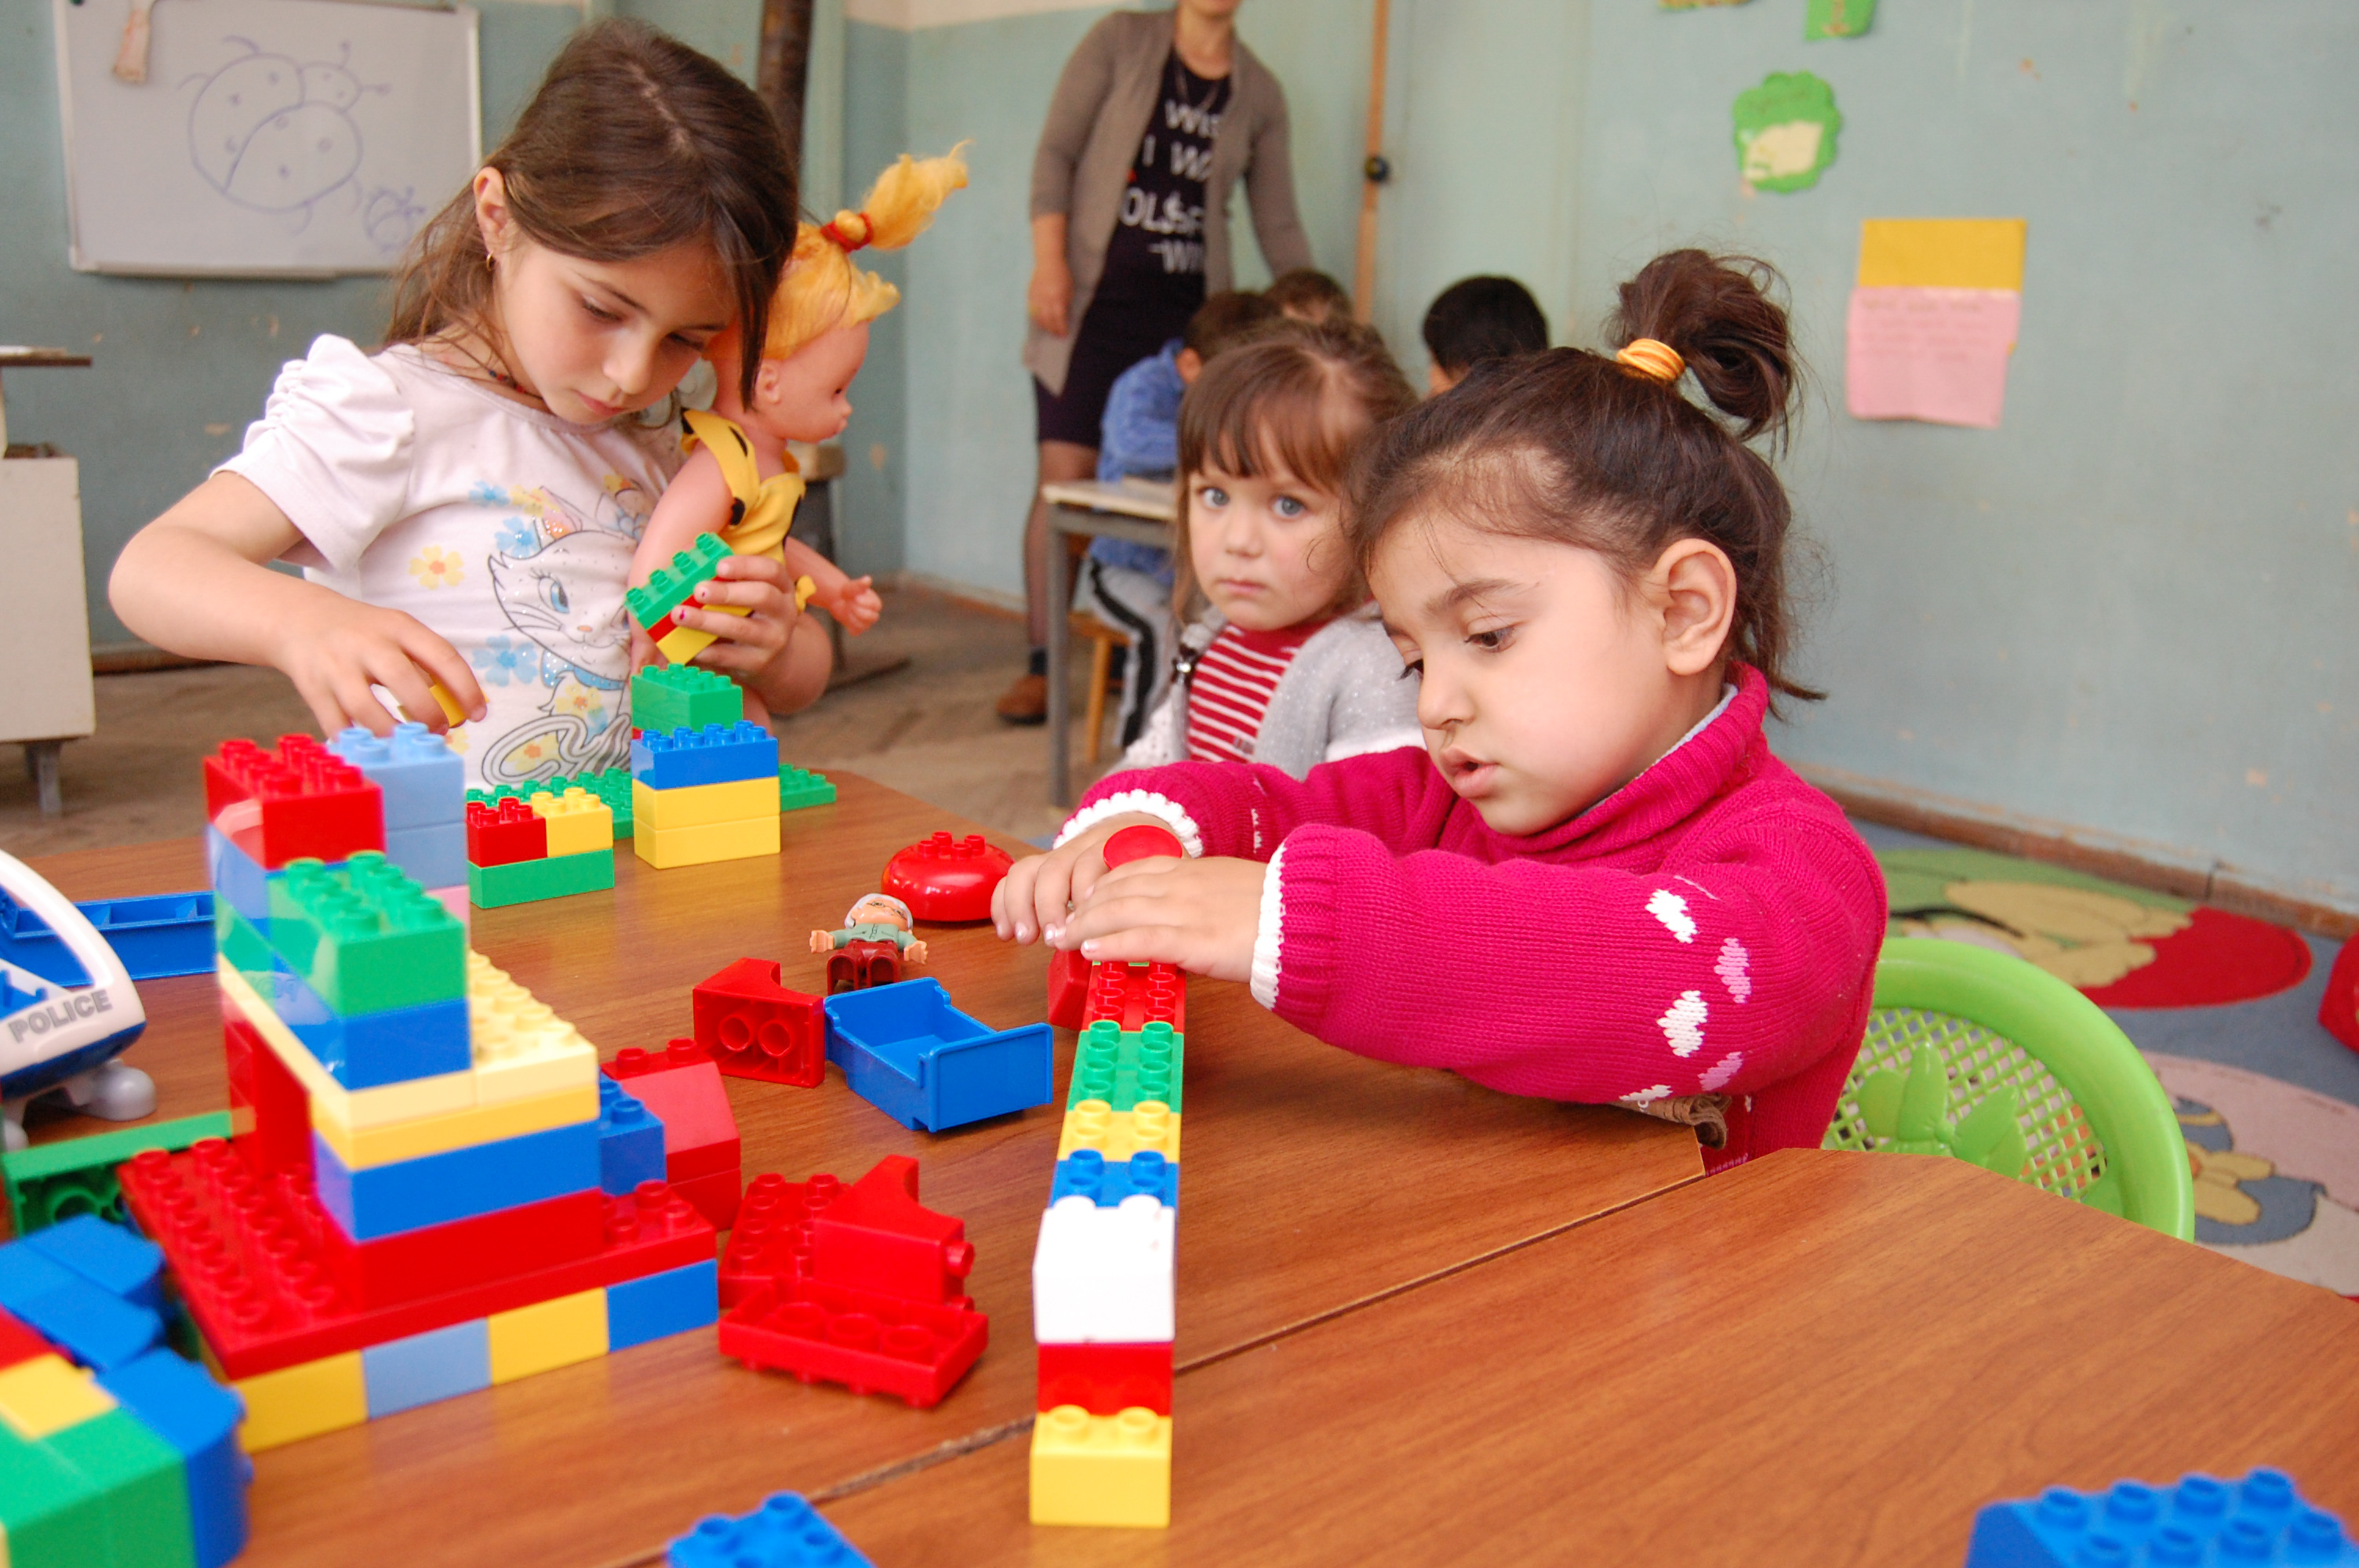 Children participate in inclusive education programming in Georgia